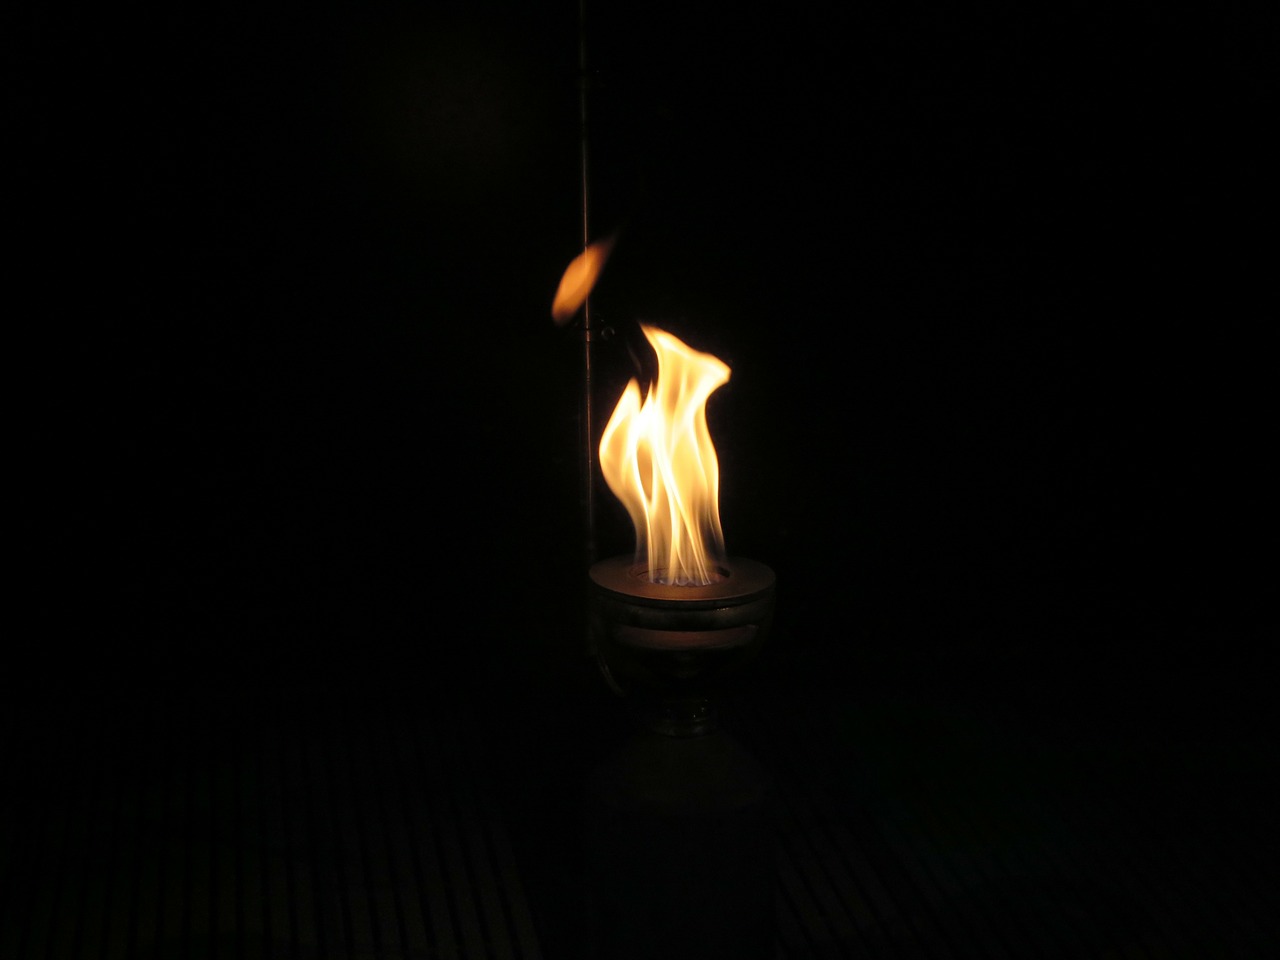 fire flames heat free photo